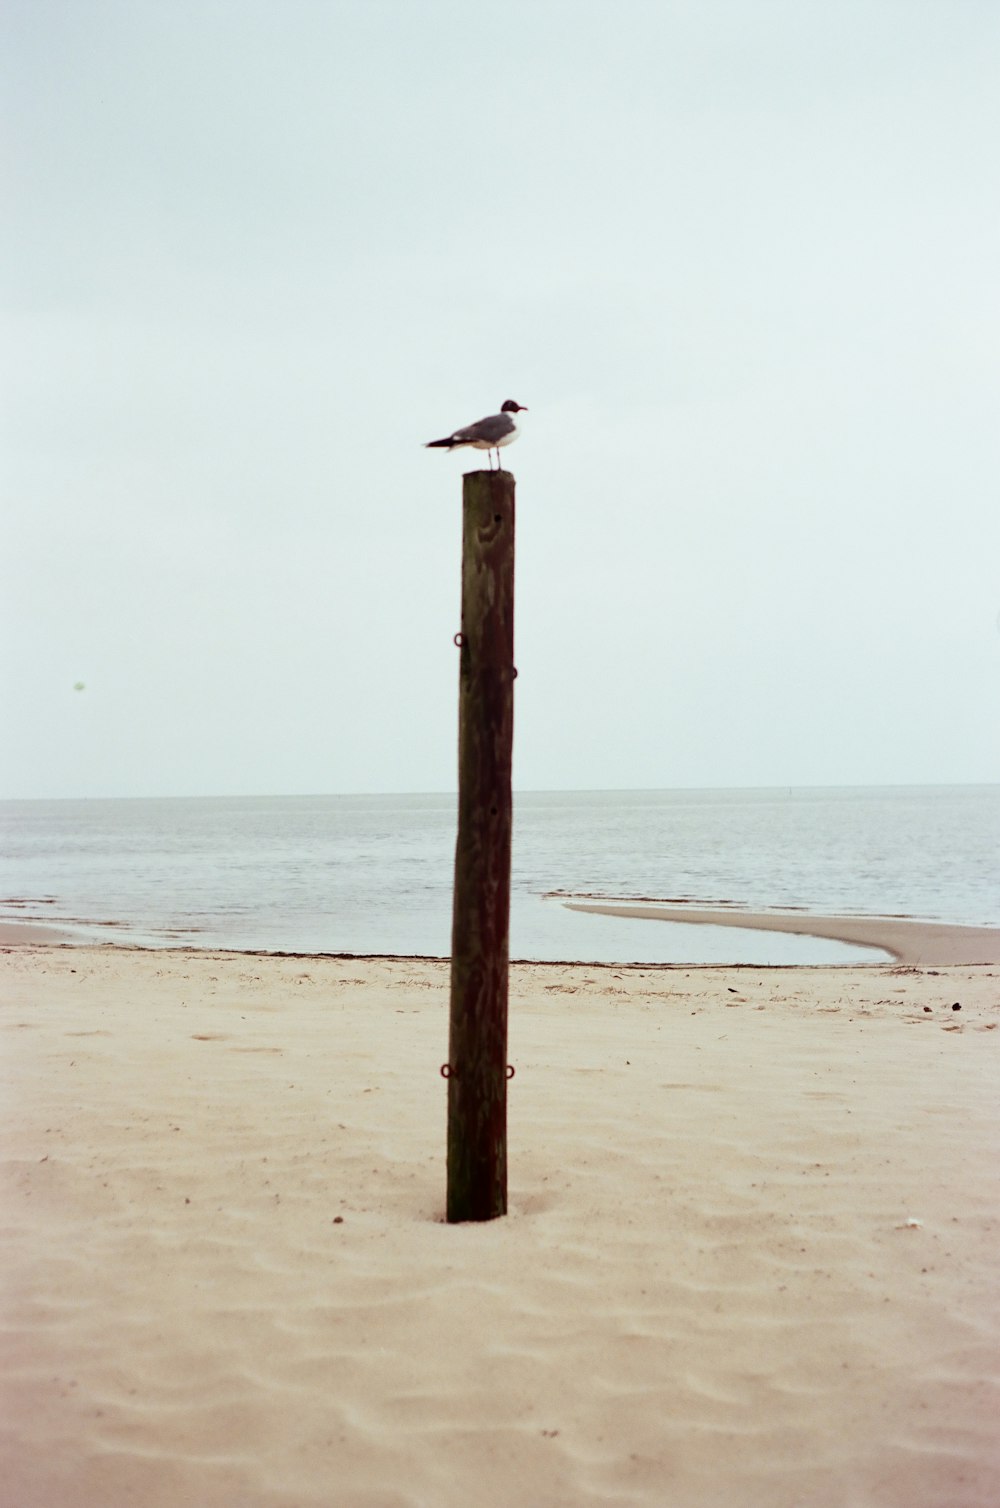 a bird on a wooden post on a beach